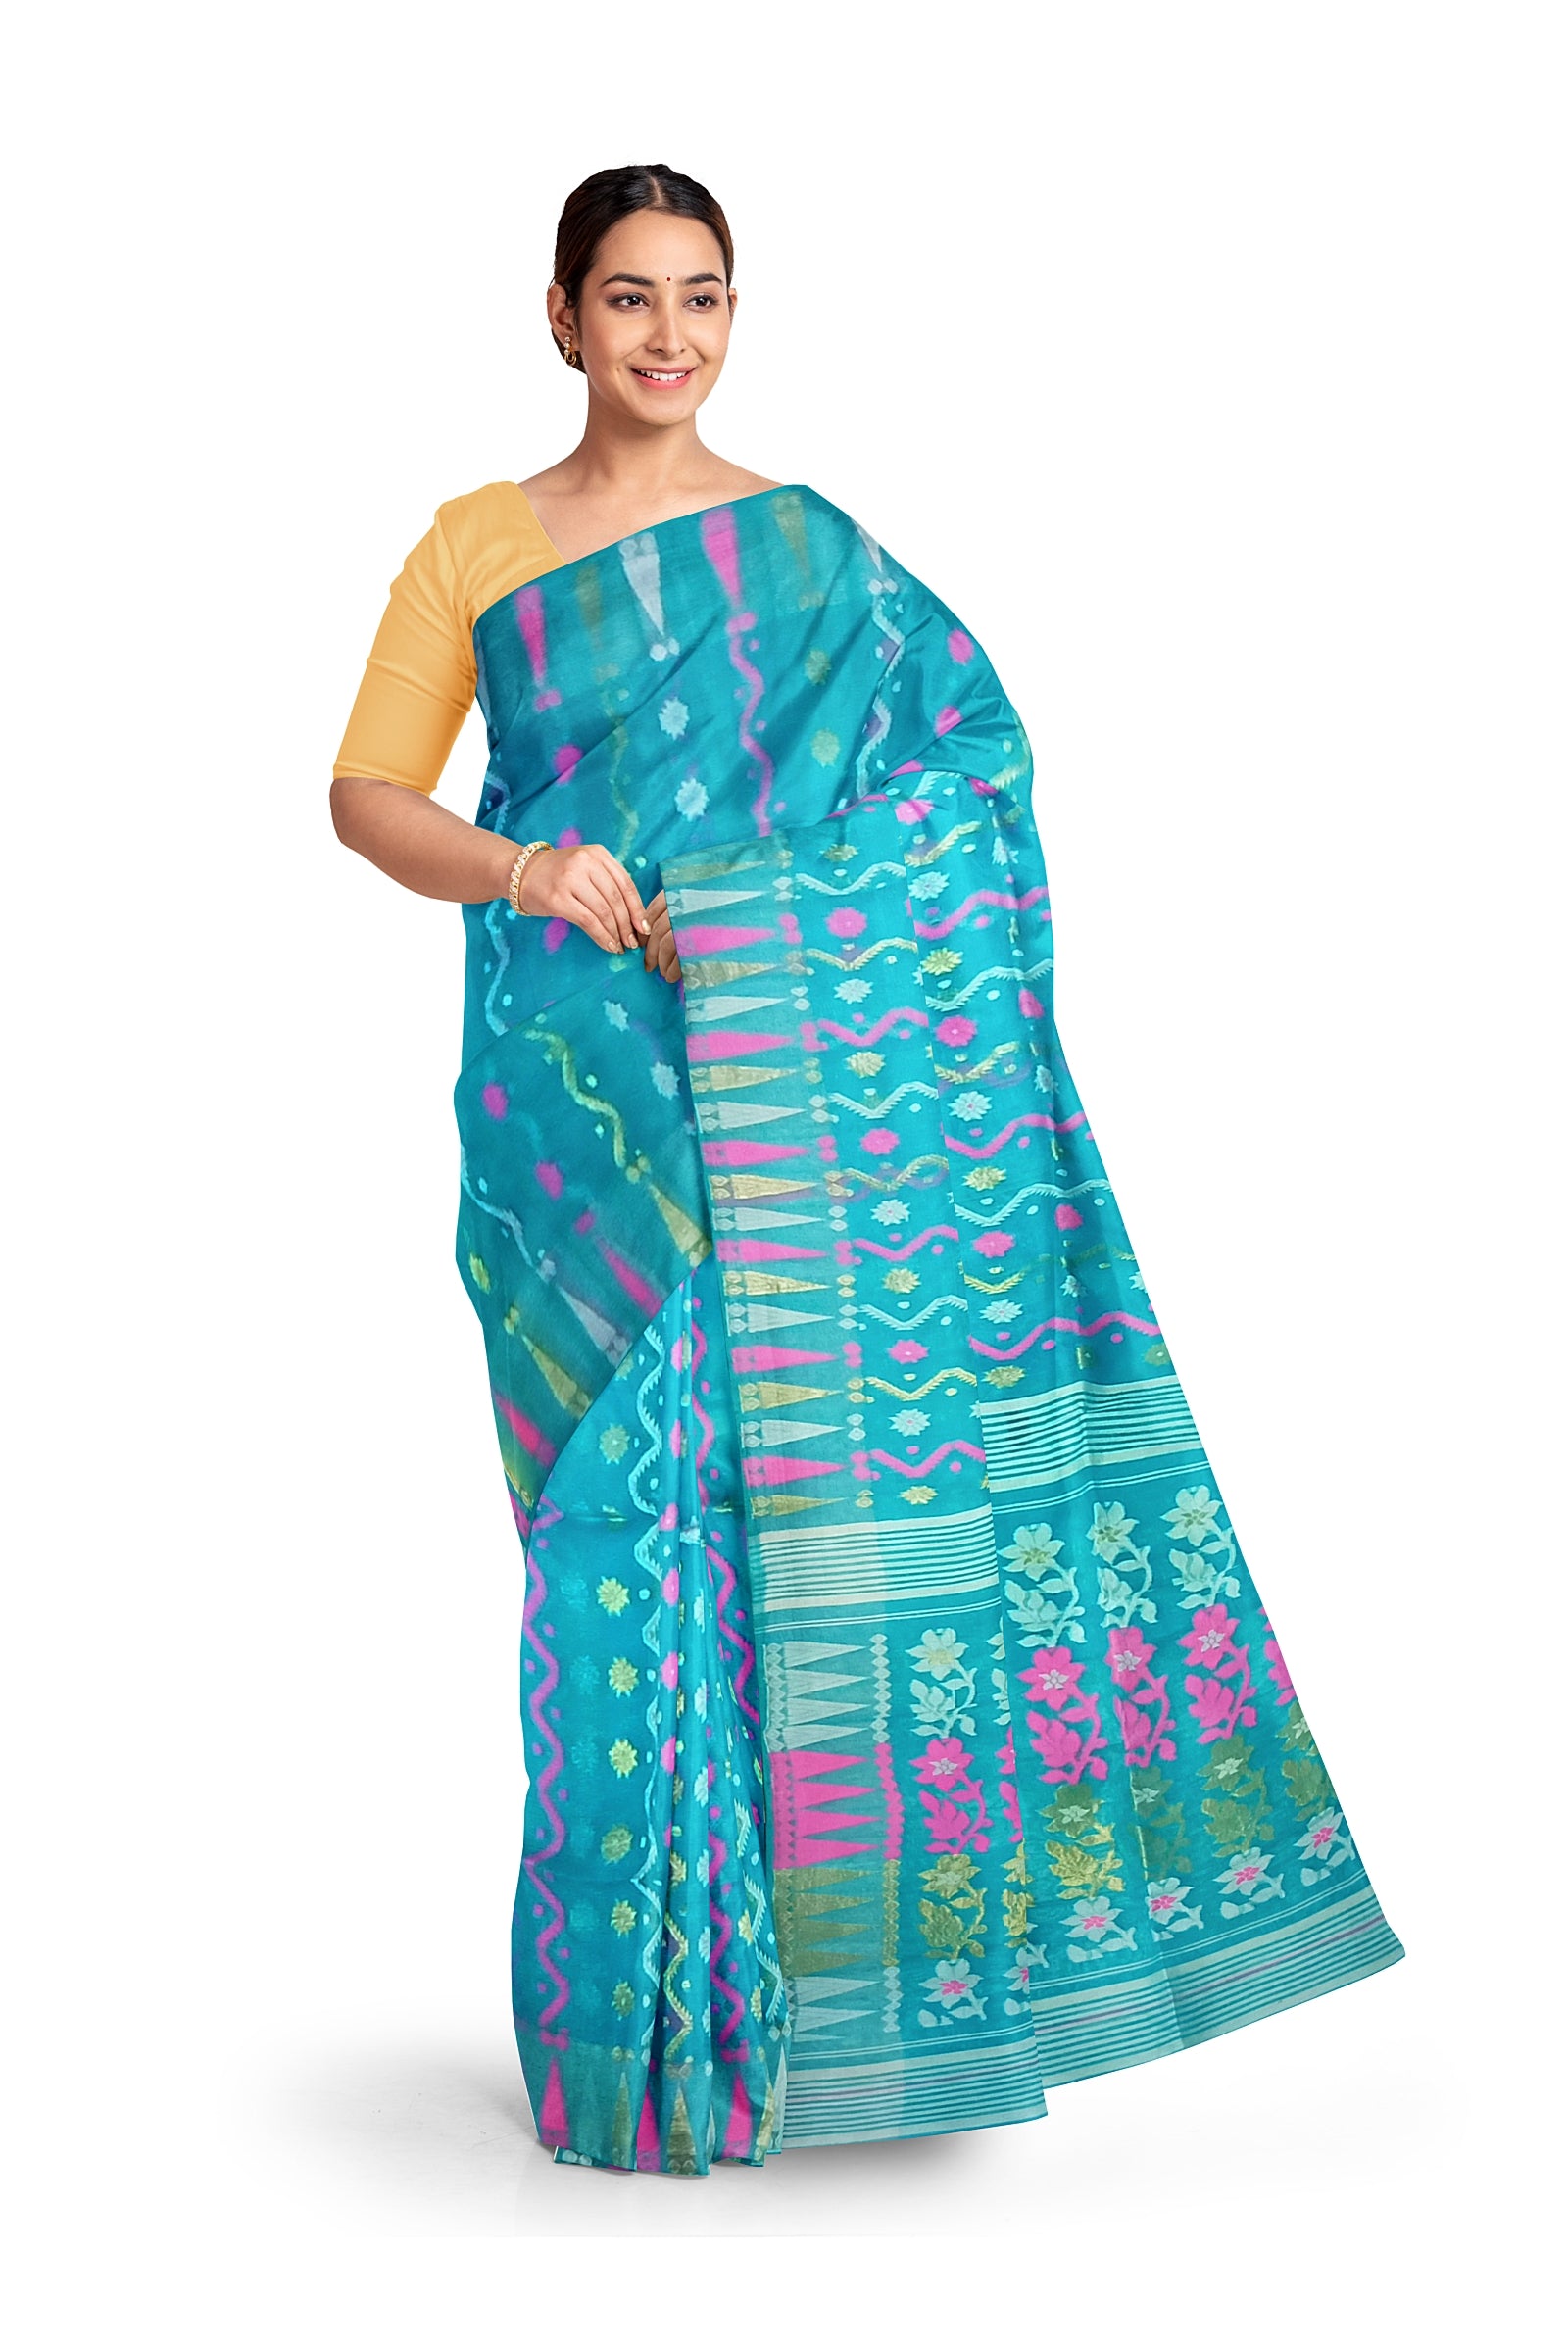 pradip fabrics saree under 2000